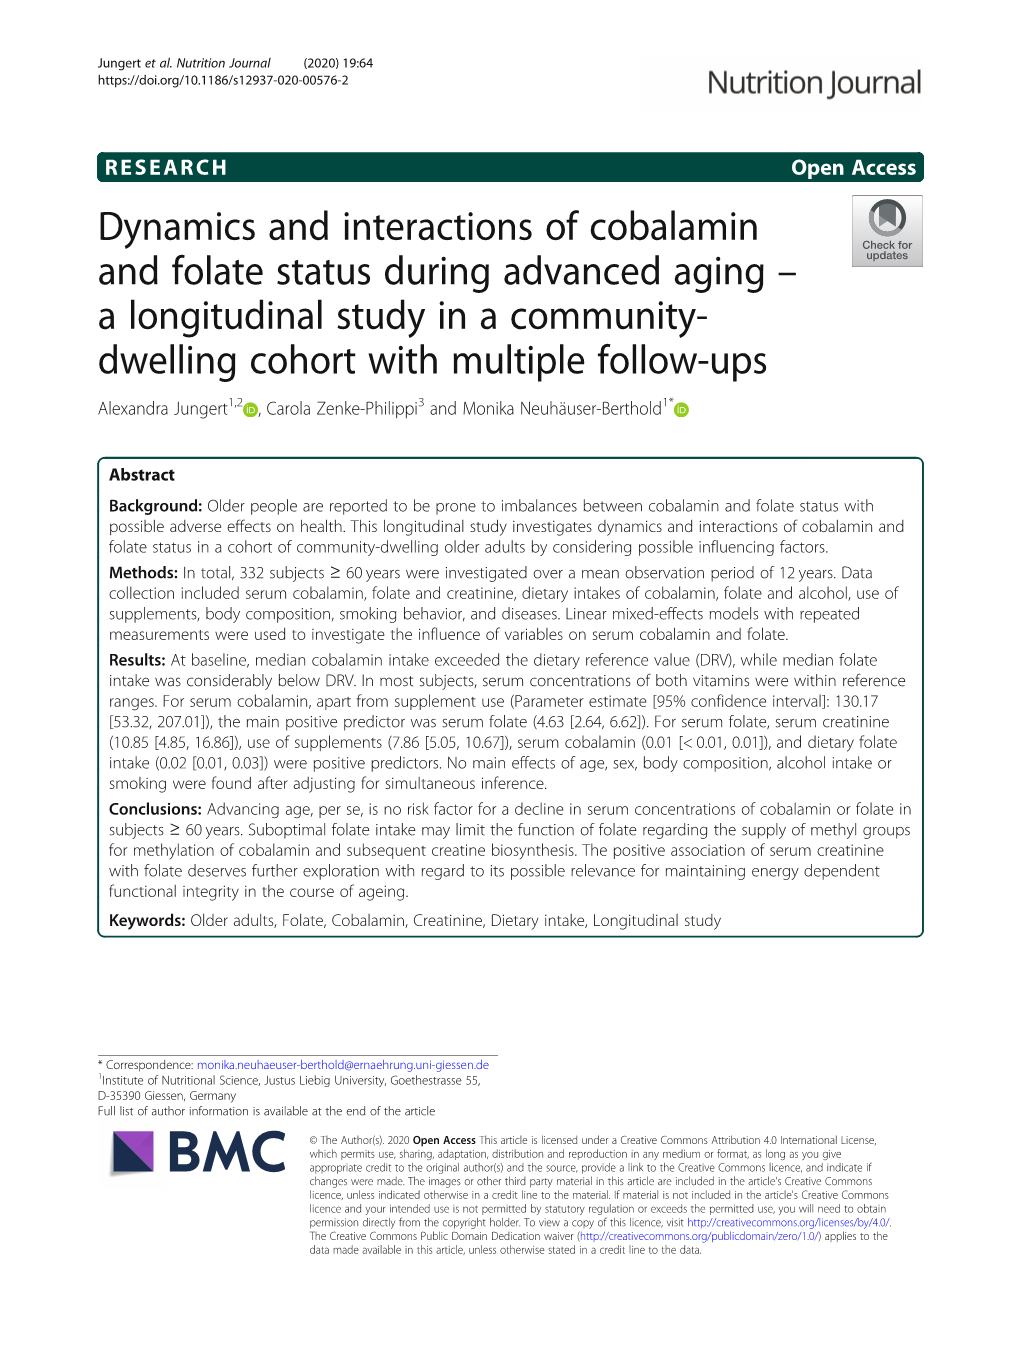 Dynamics and Interactions of Cobalamin And